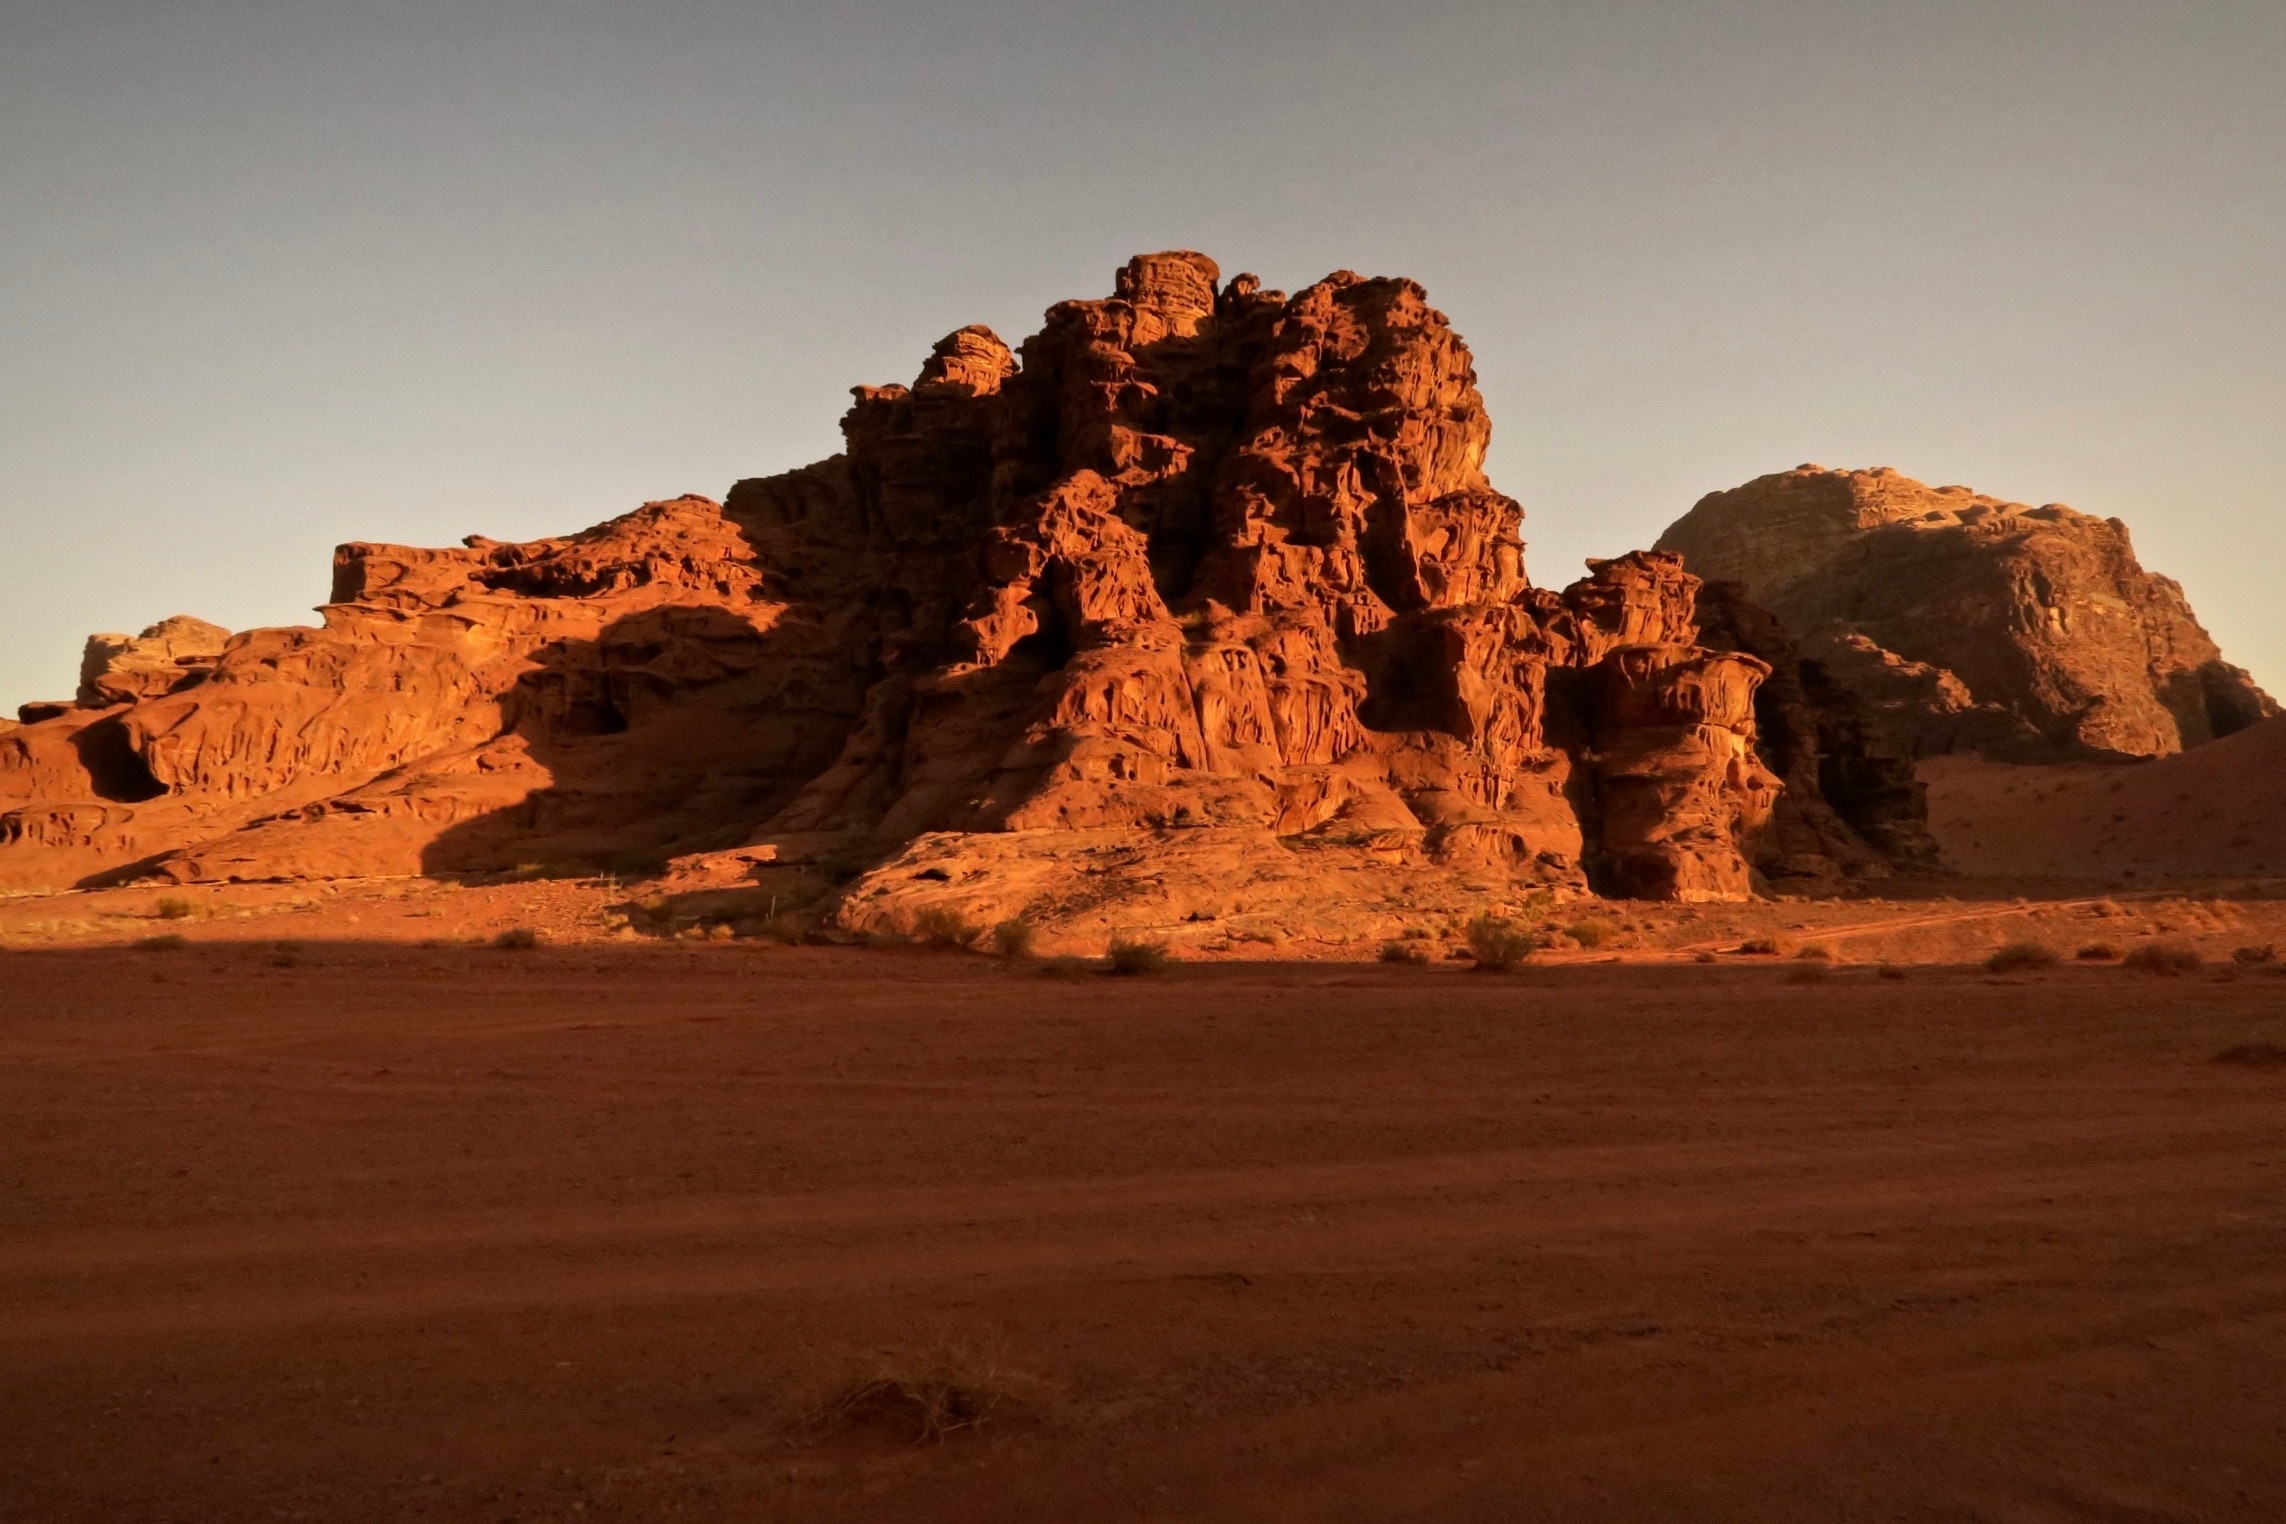 desert, landscape, sunny, highland, rock formation, rock - object